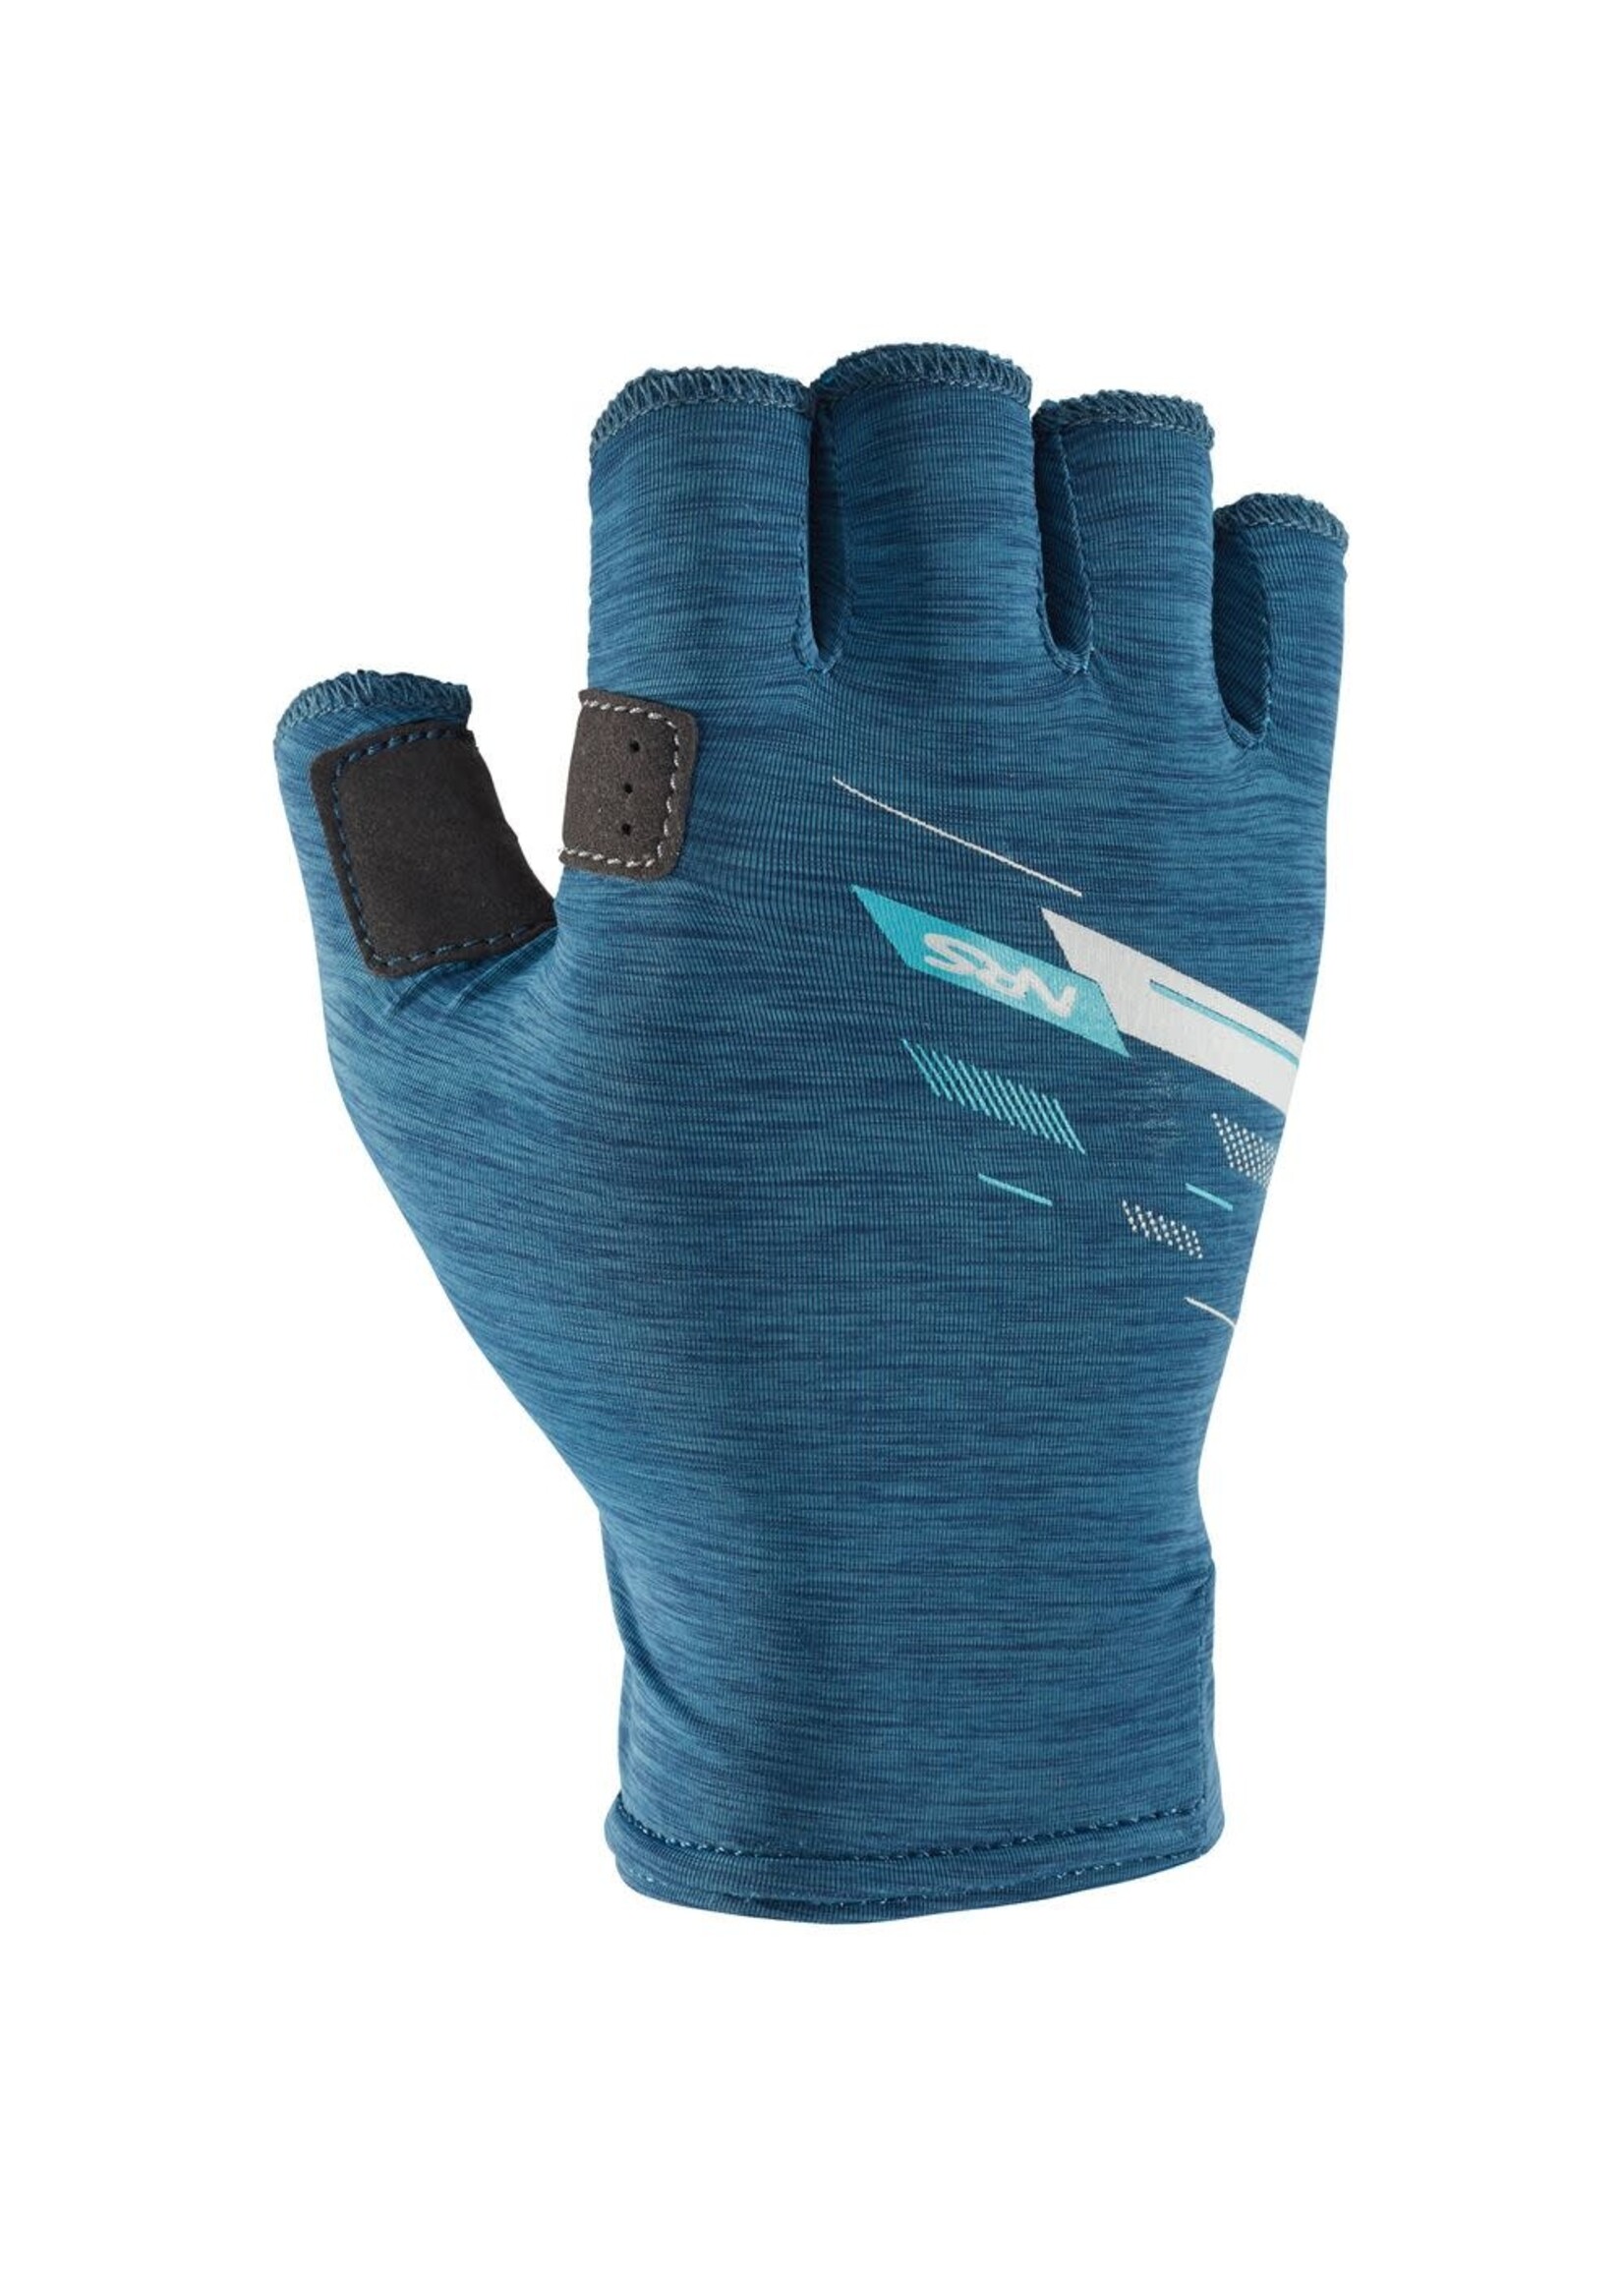 NRS NRS Mens Boater's Glove Poseidon - XL